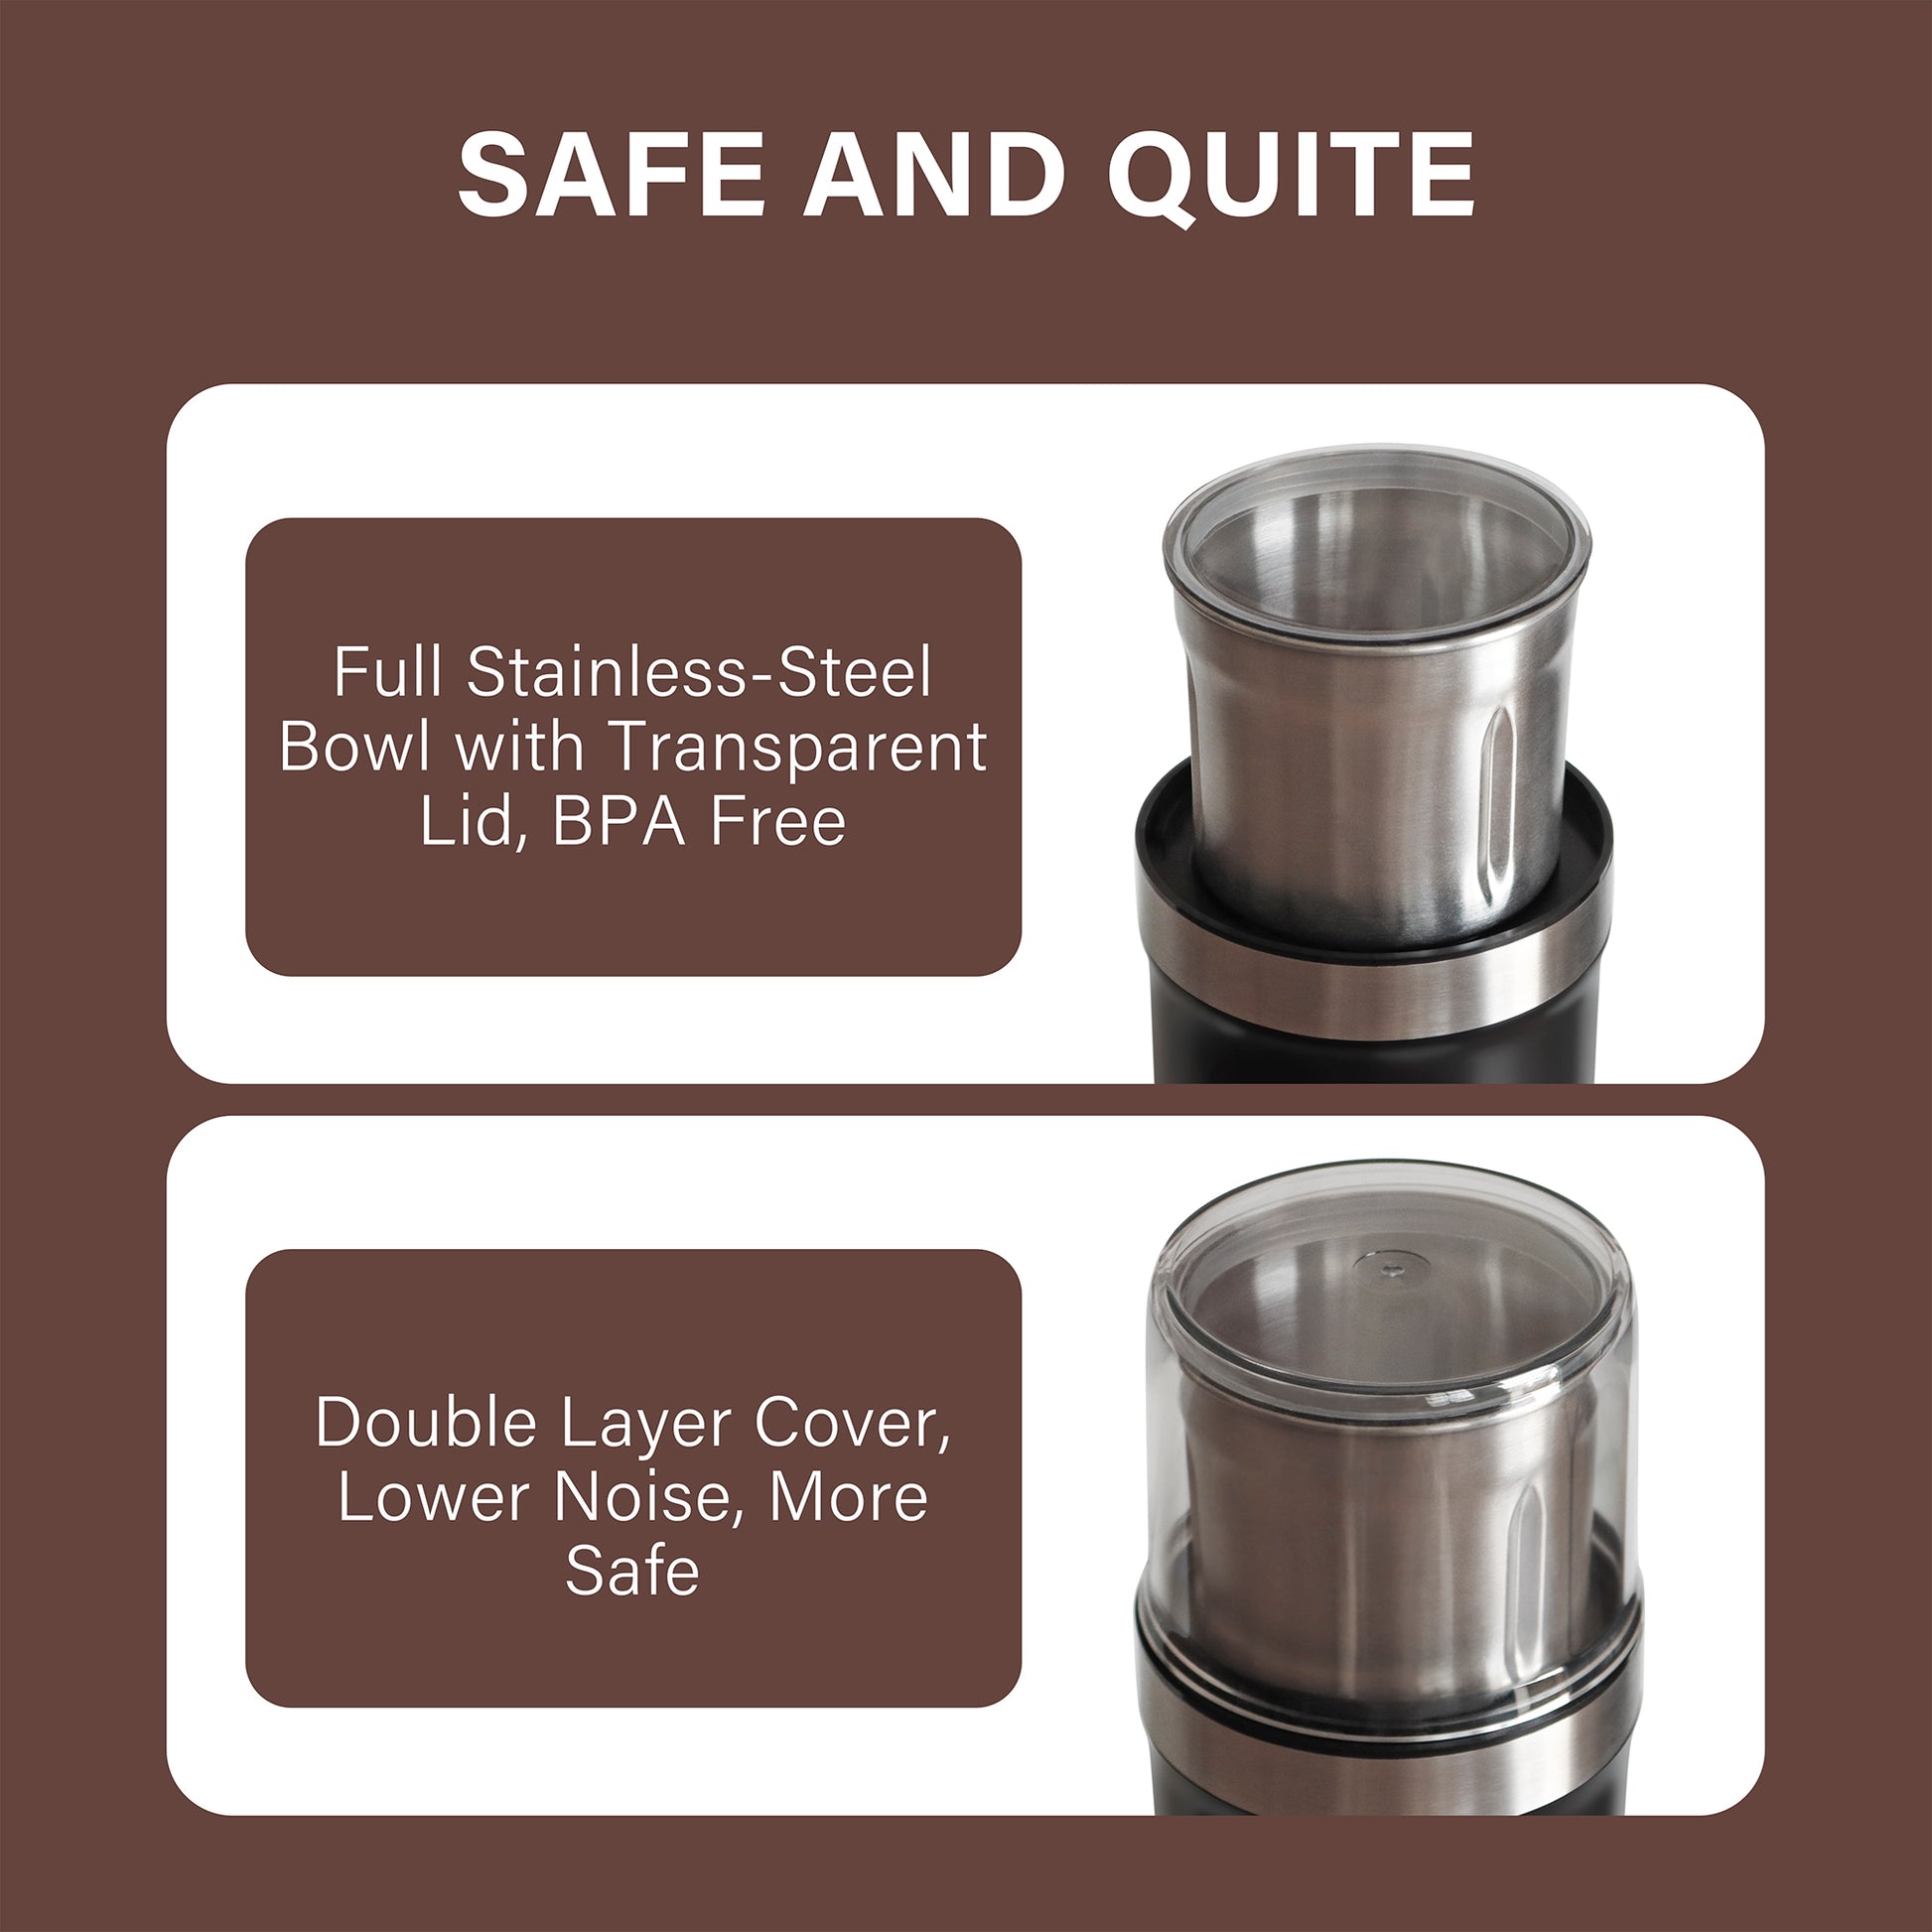 <img src="coffee grinder.jpg" alt="wirsh stainless steel double layer grinder"/>